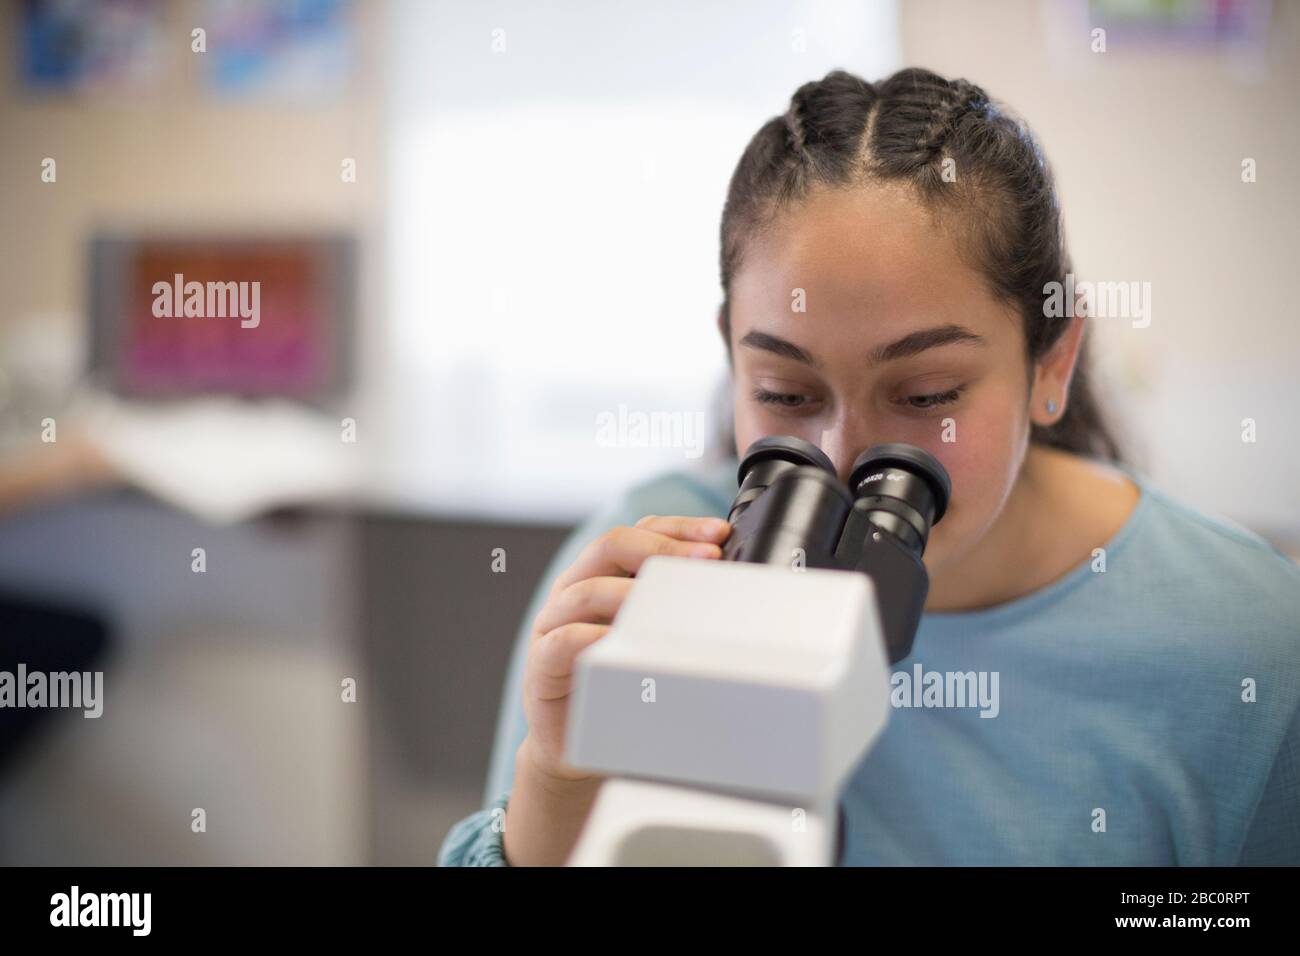 Girl student using microscope in classroom Stock Photo